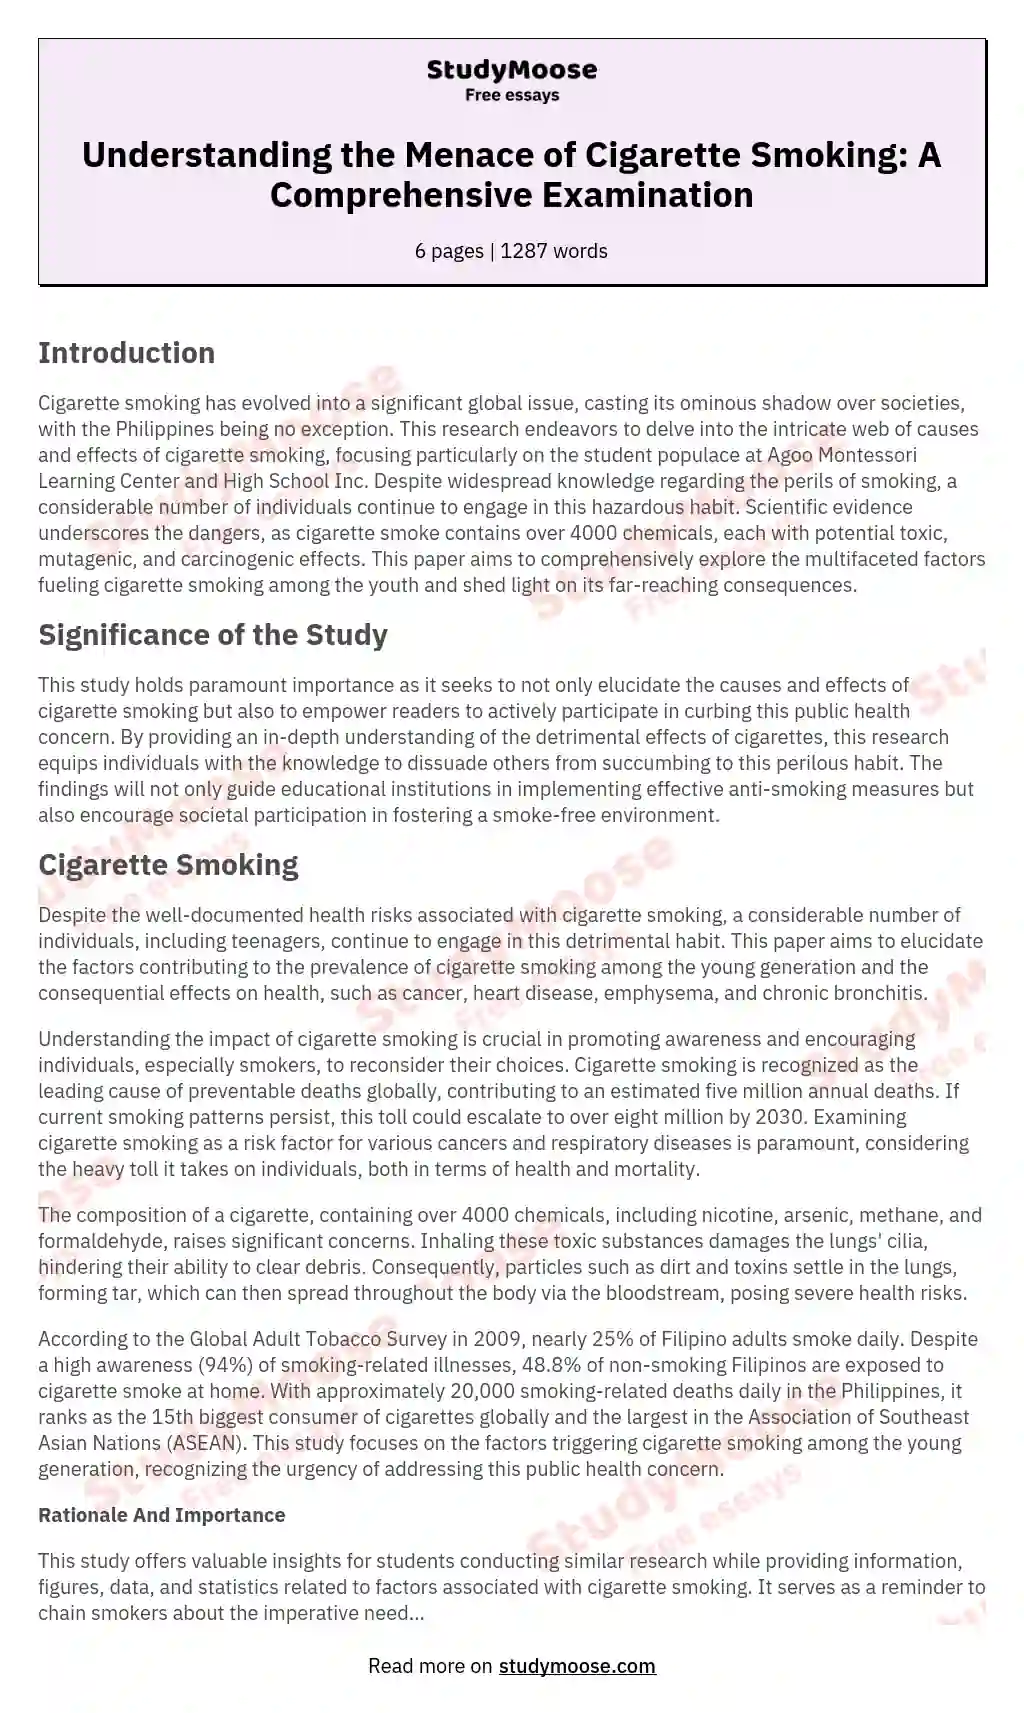 Understanding the Menace of Cigarette Smoking: A Comprehensive Examination essay